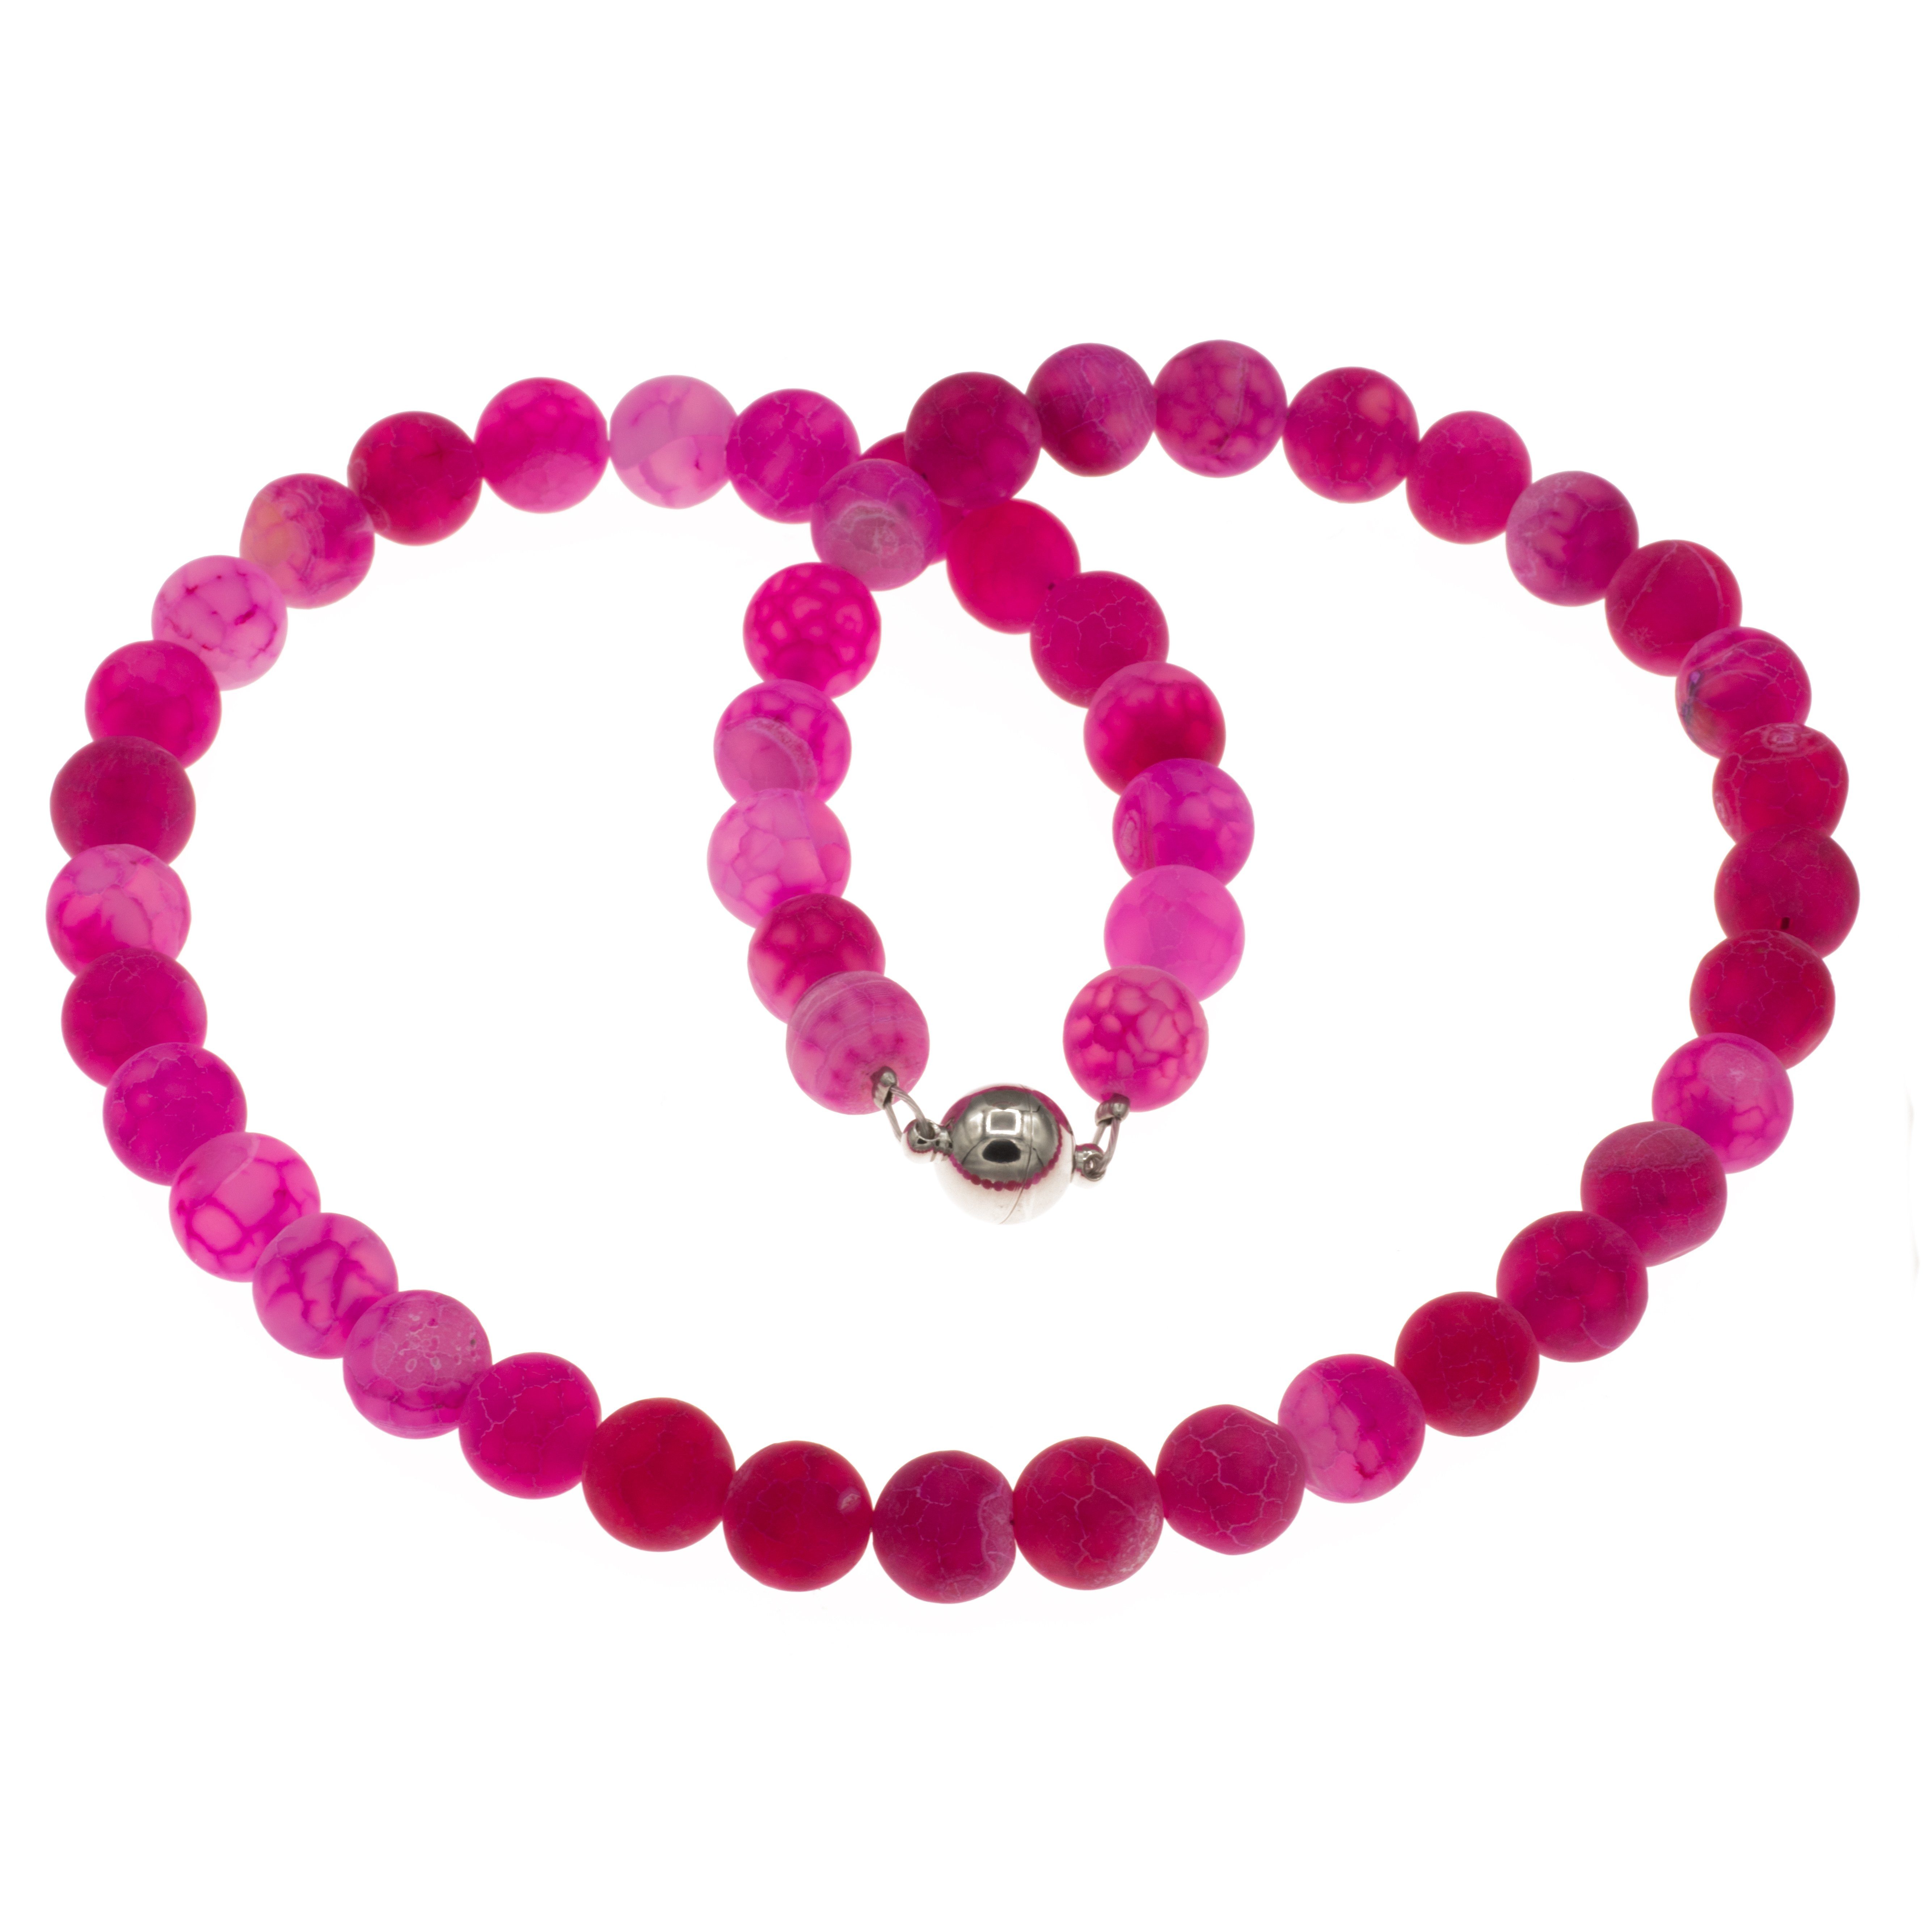 Bella Carina Perlenkette Edelsteinen intensives kette mit mm pink Perlen, Pink 10 intensives Achat